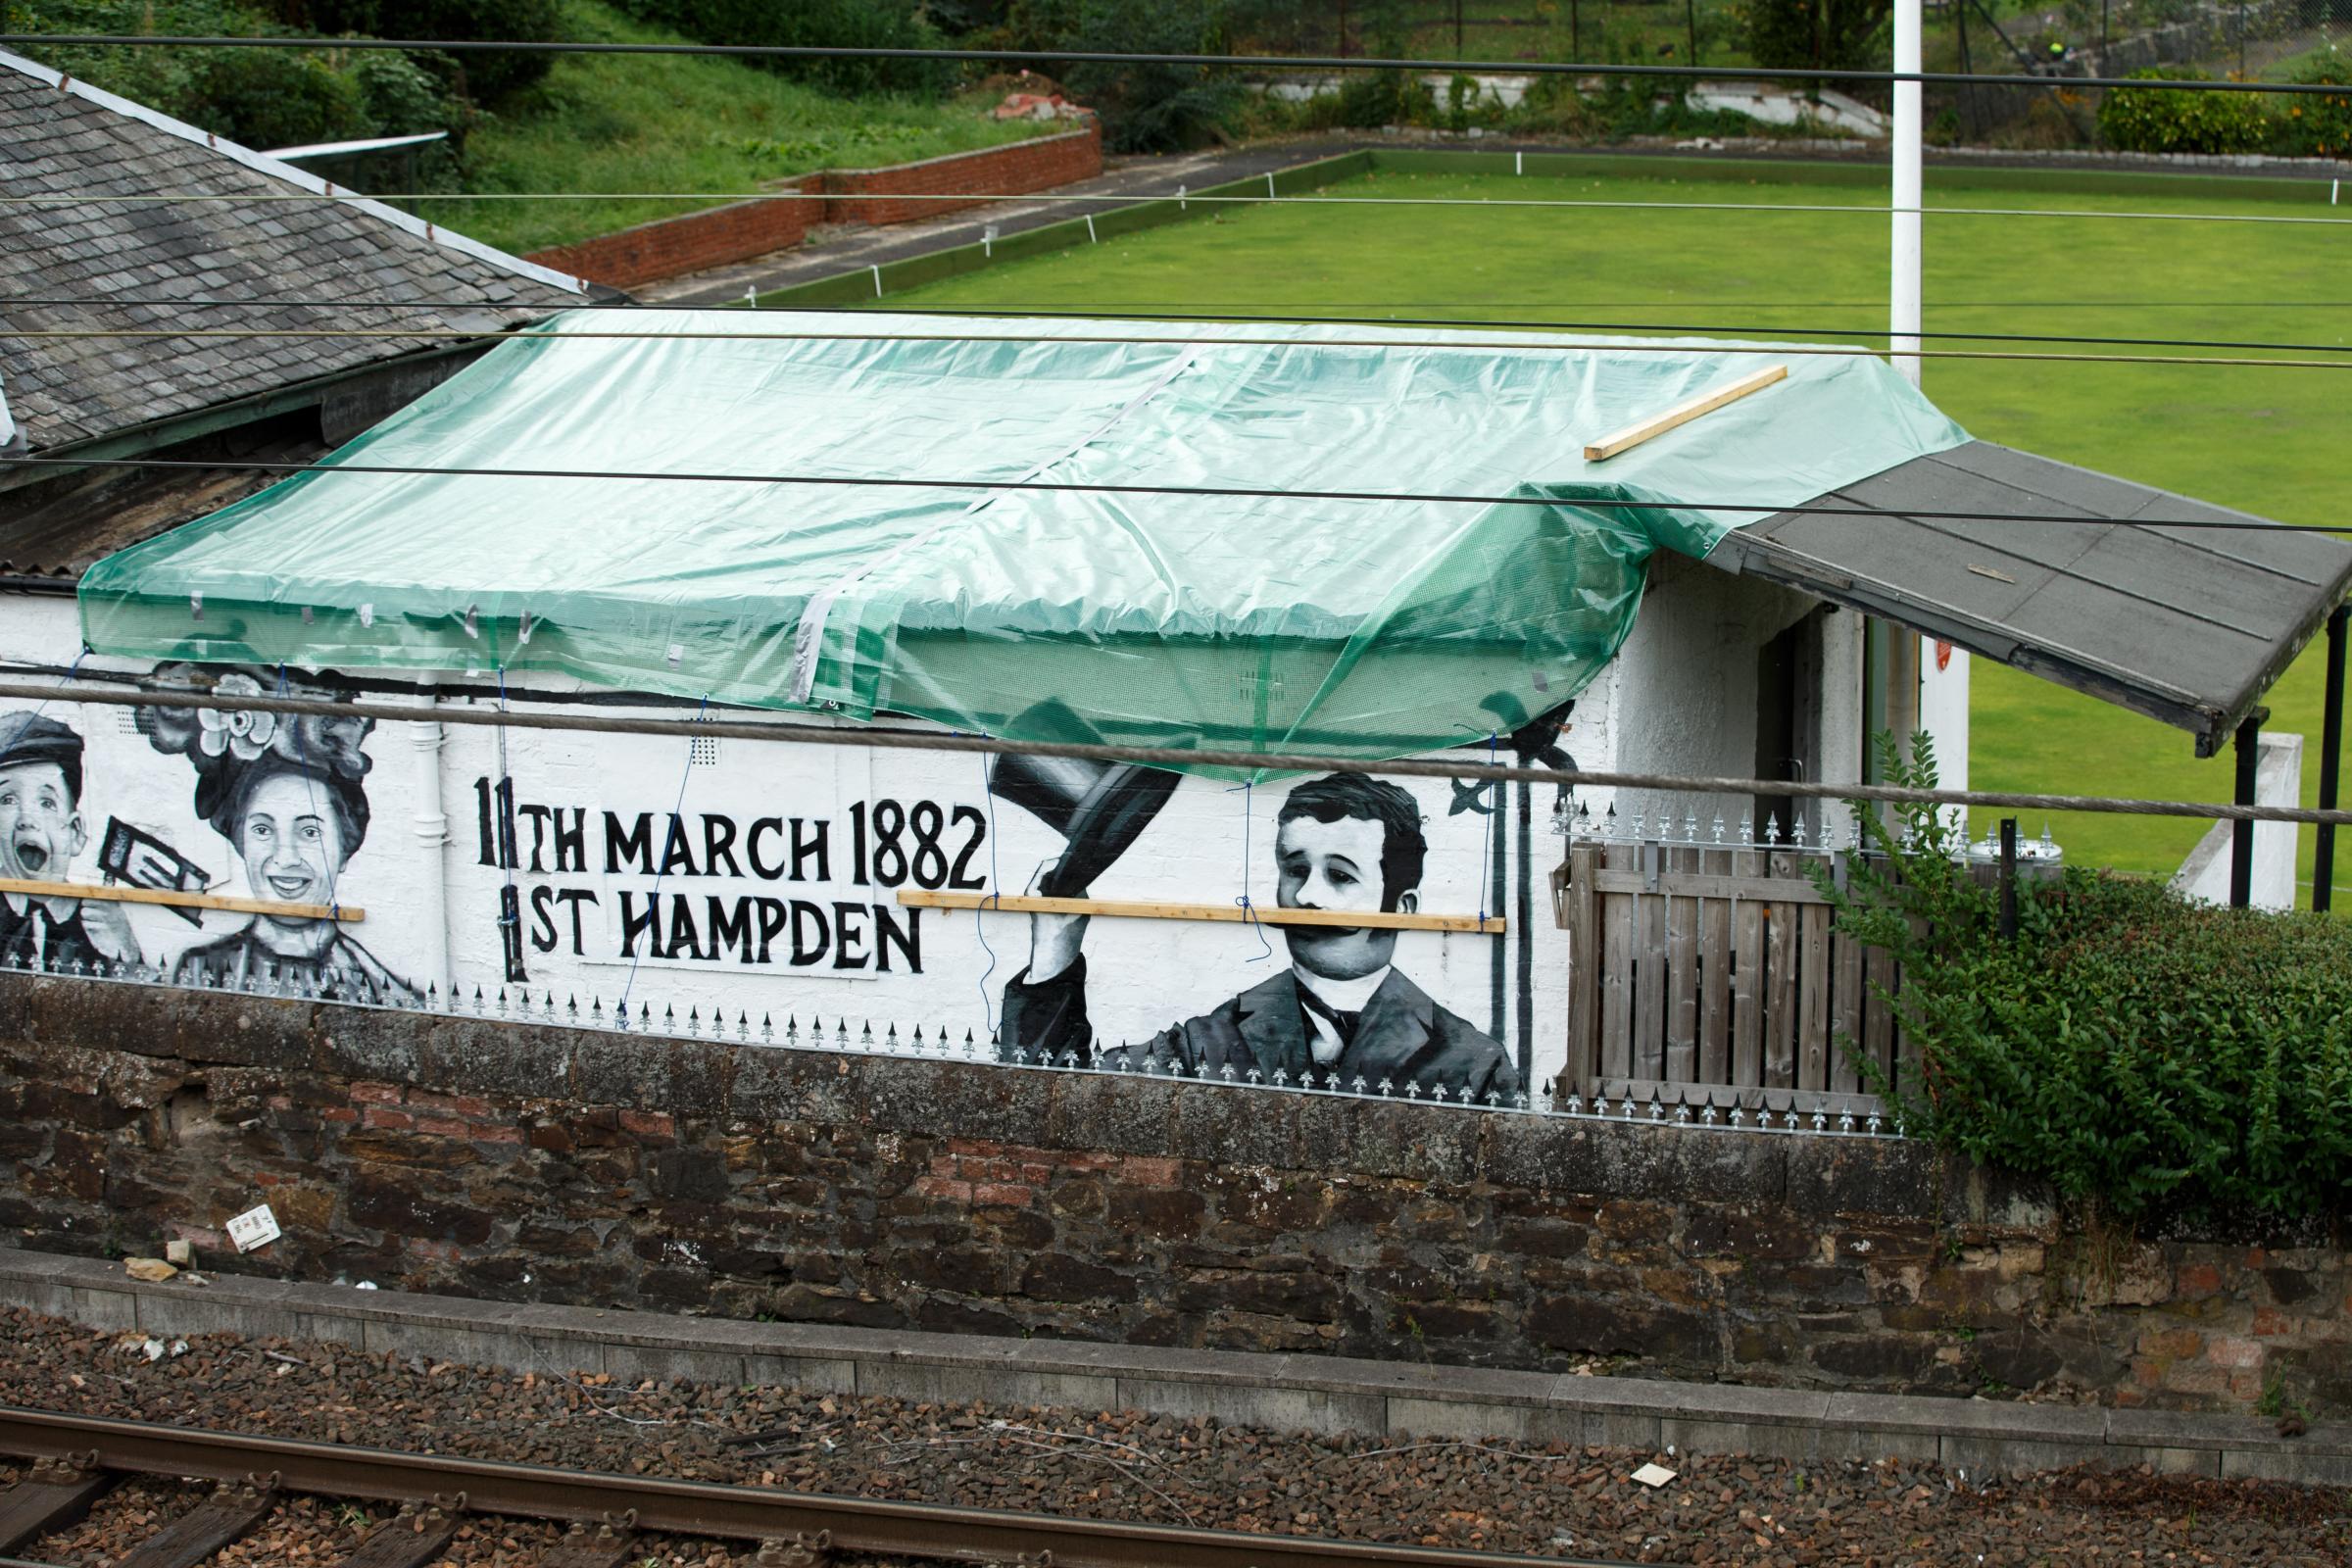 Hampden Bowling Club where the first Hampden Park was discovered